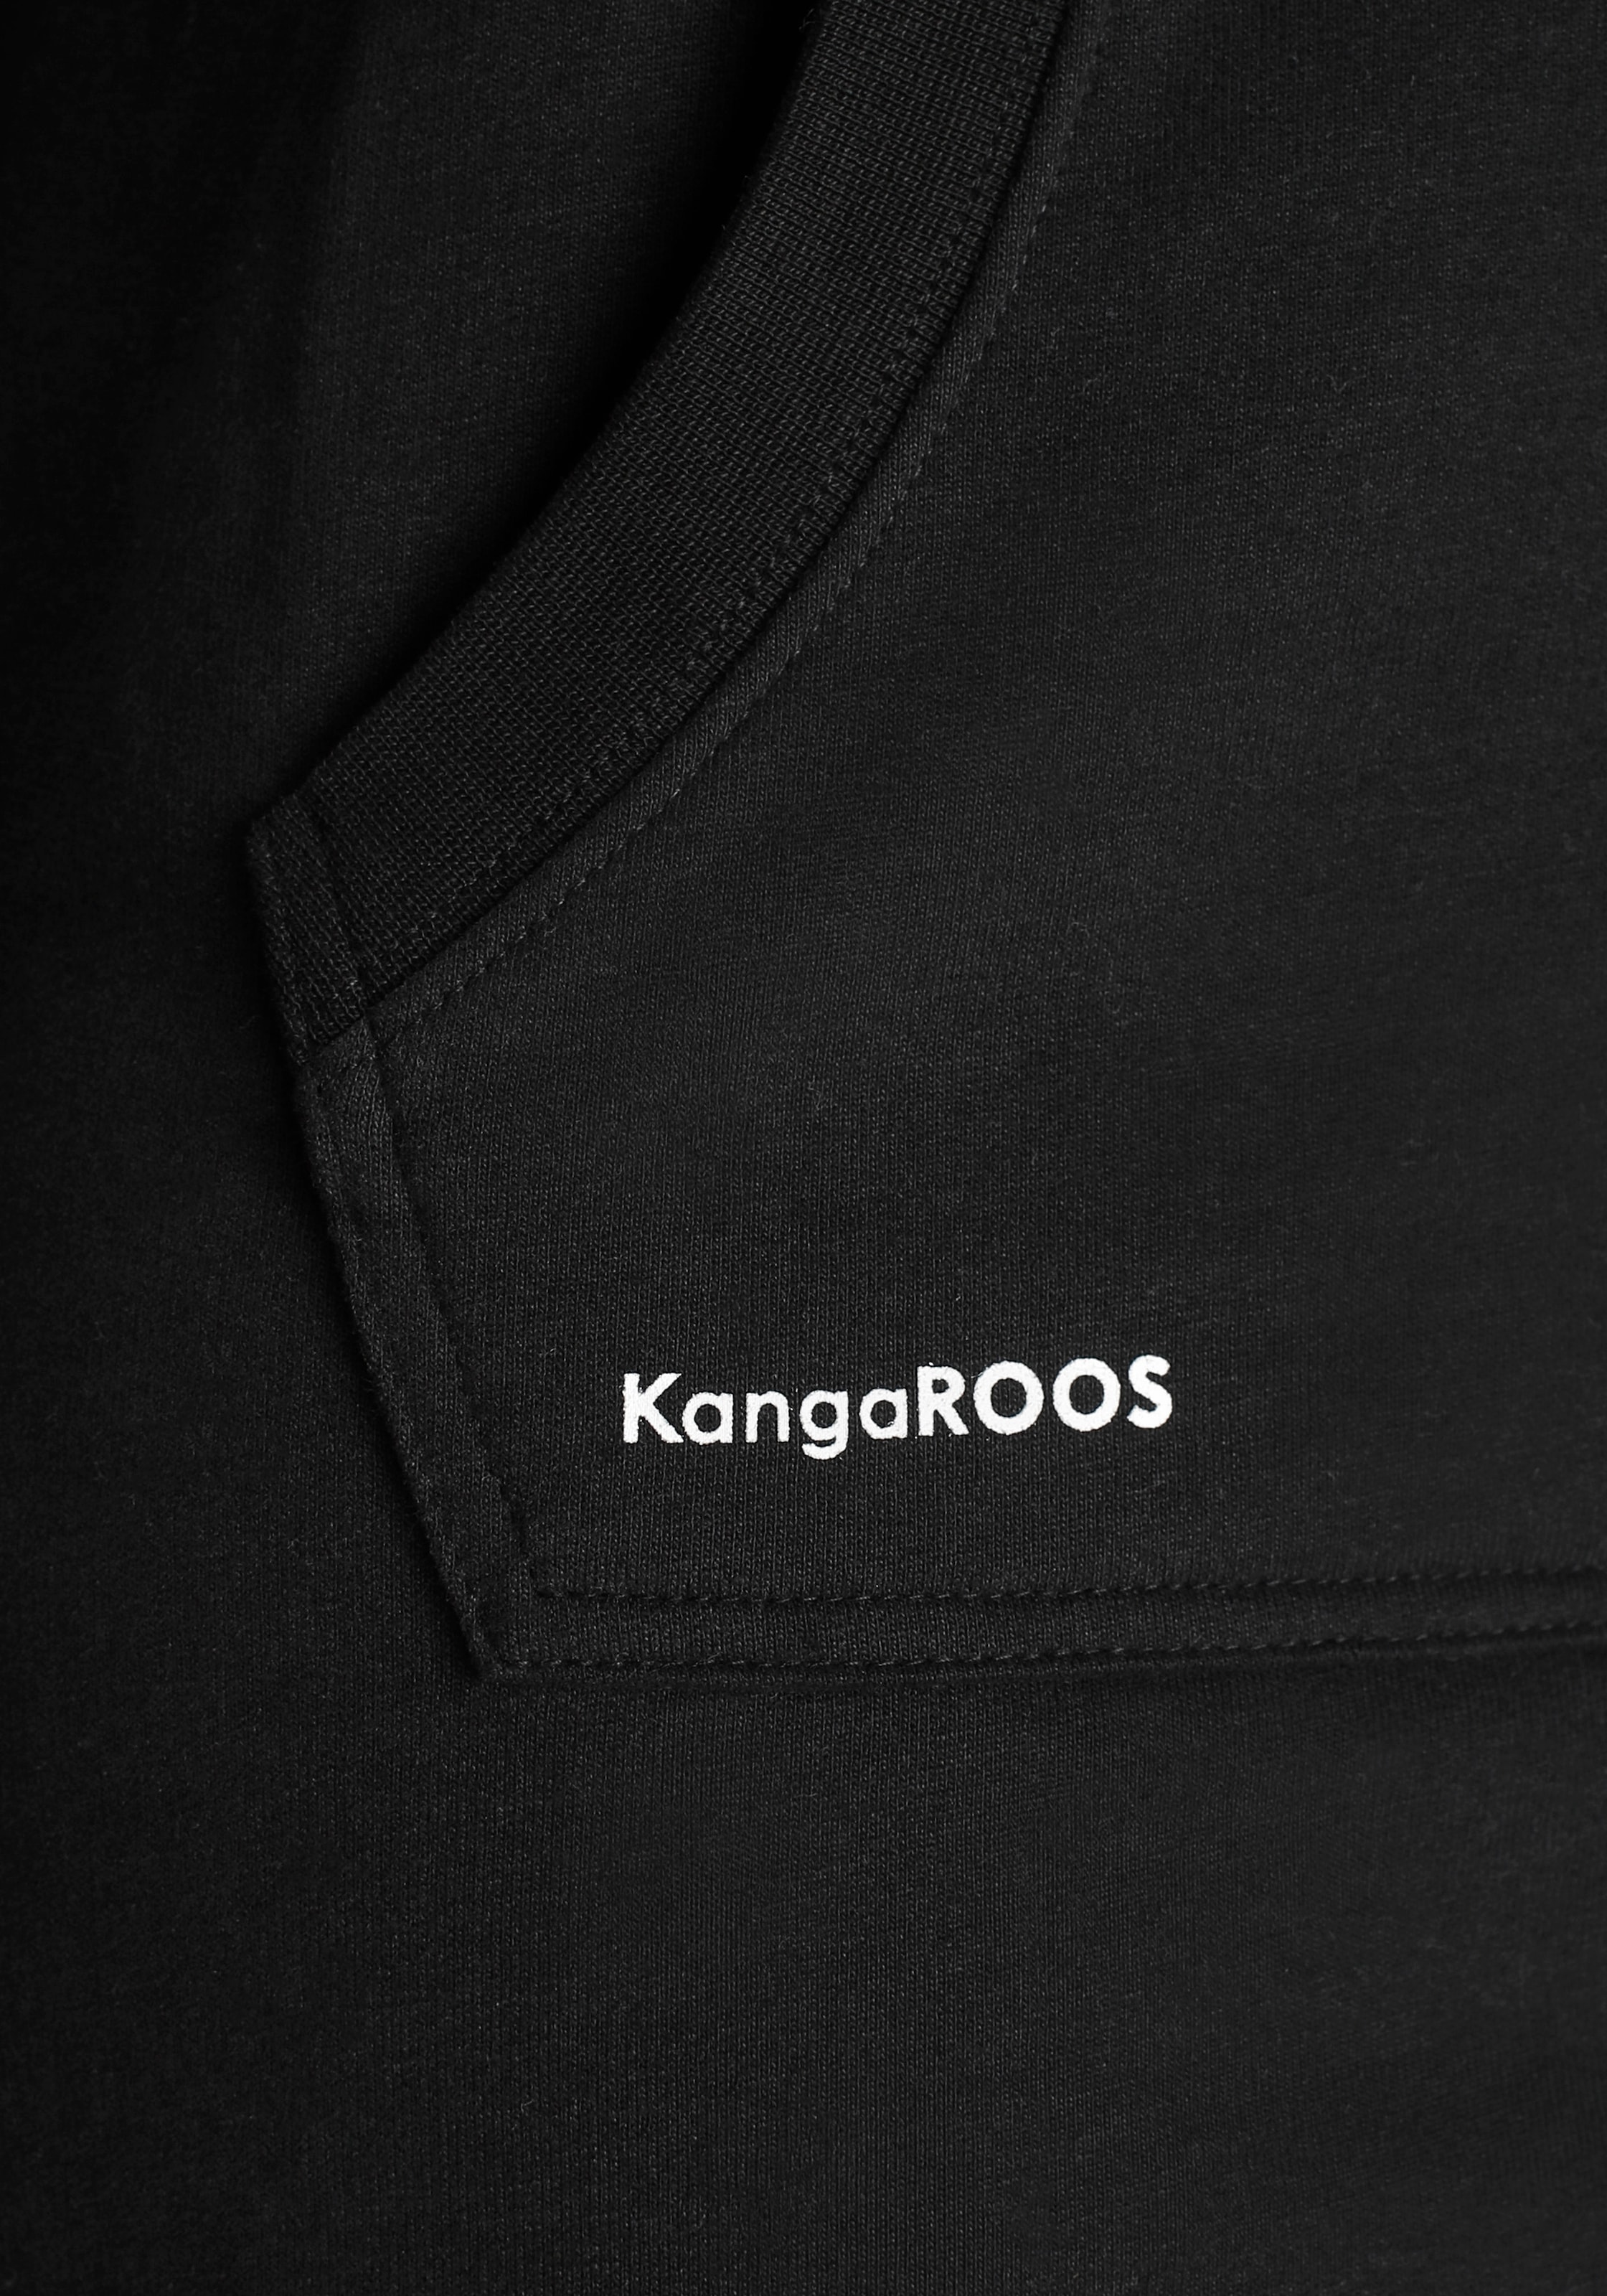 KangaROOS Sweatkleid, mit bedruckten Raglanärmeln und Kapuze